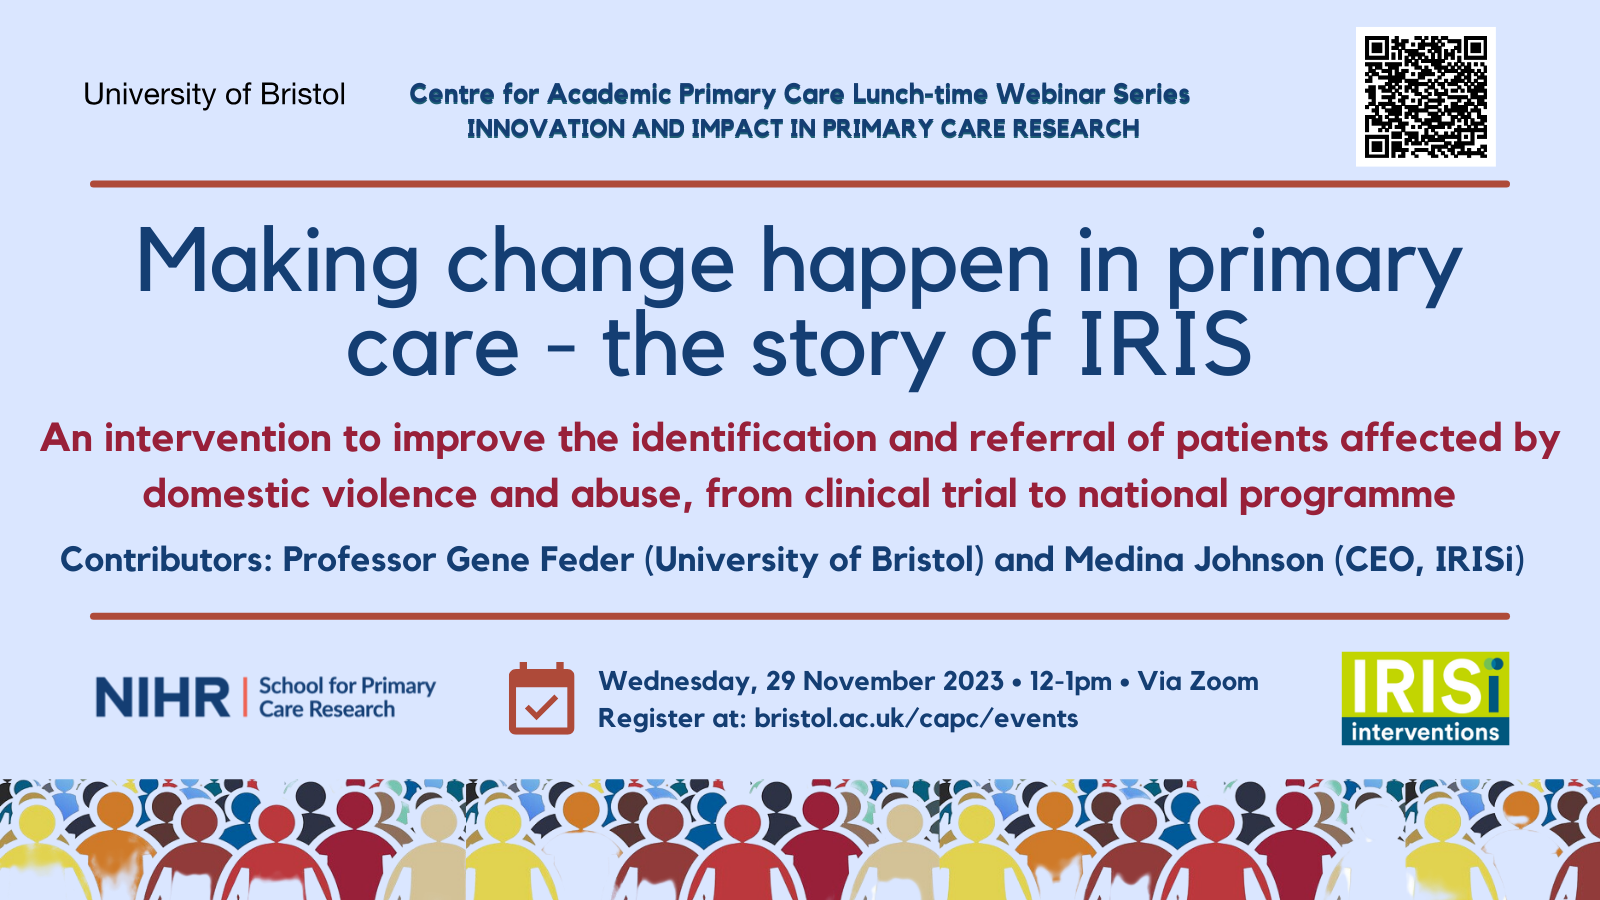 Image advertising the 'Making change happen in primary care' webinar (the story of IRIS) held on 29 November 2023, via Zoom.